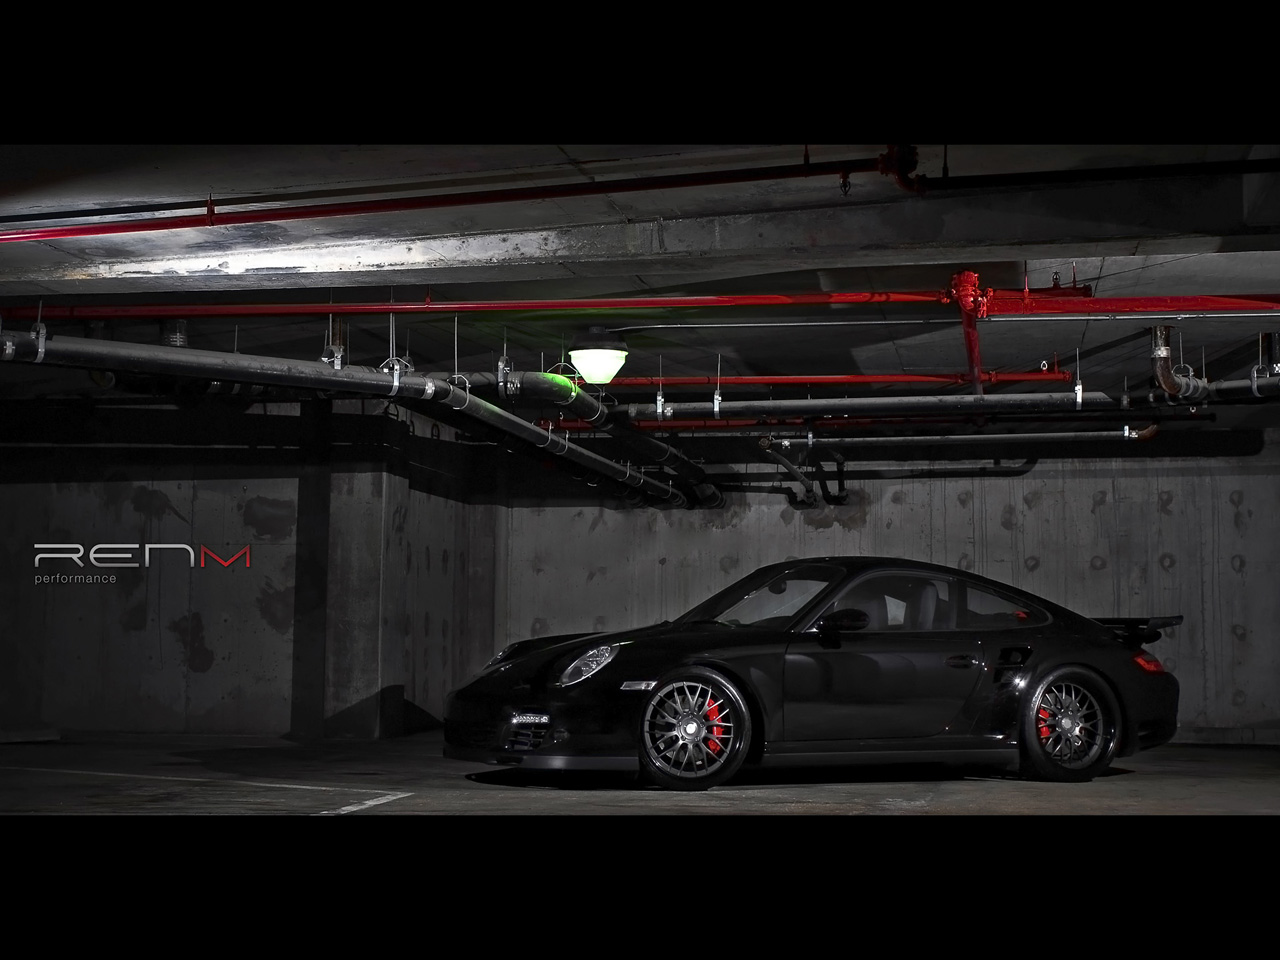 2011 RENM Porsche 997 Turbo - Side Angle - 1280x960 - Wallpaper